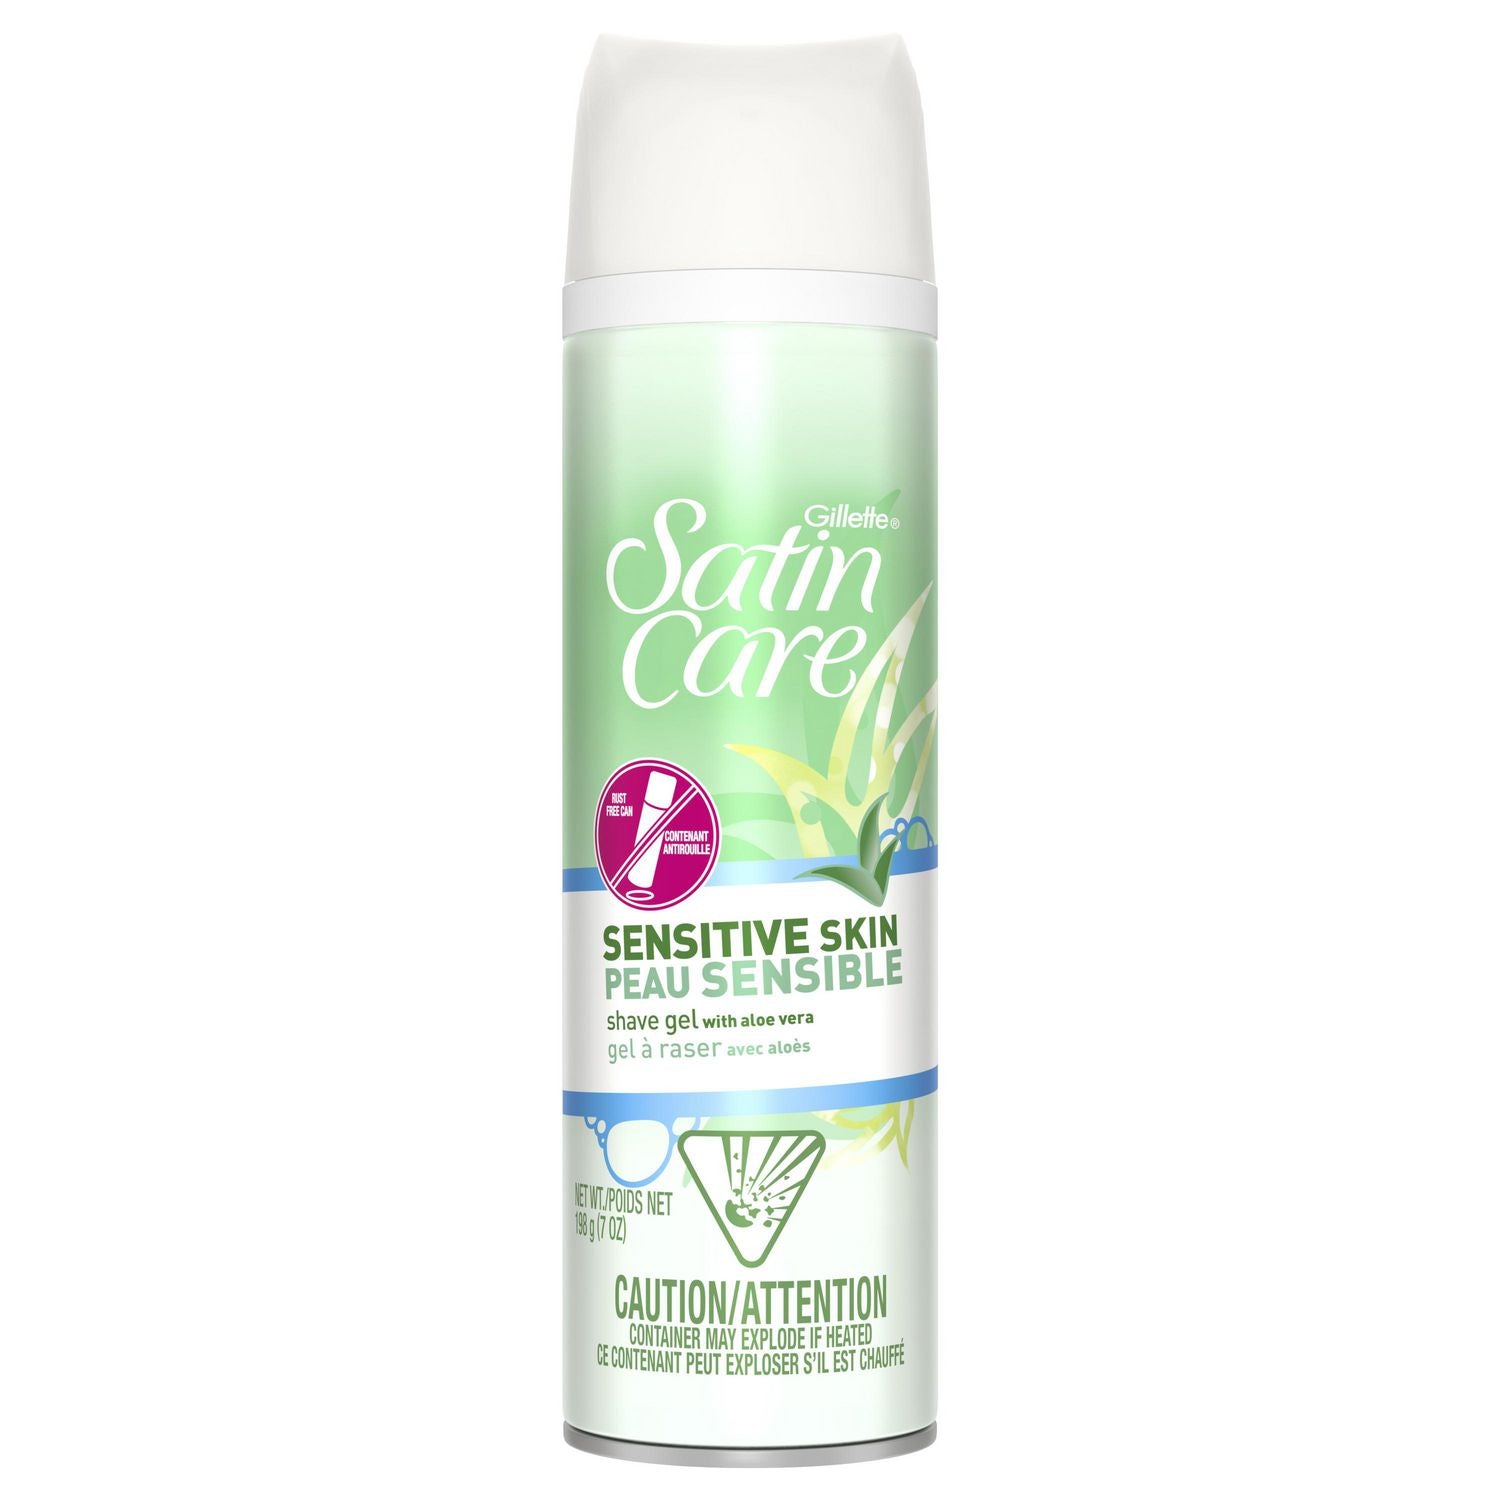 Gillette Satin Care Sensitive Skin Shave Gel with Aloe Vera 198g